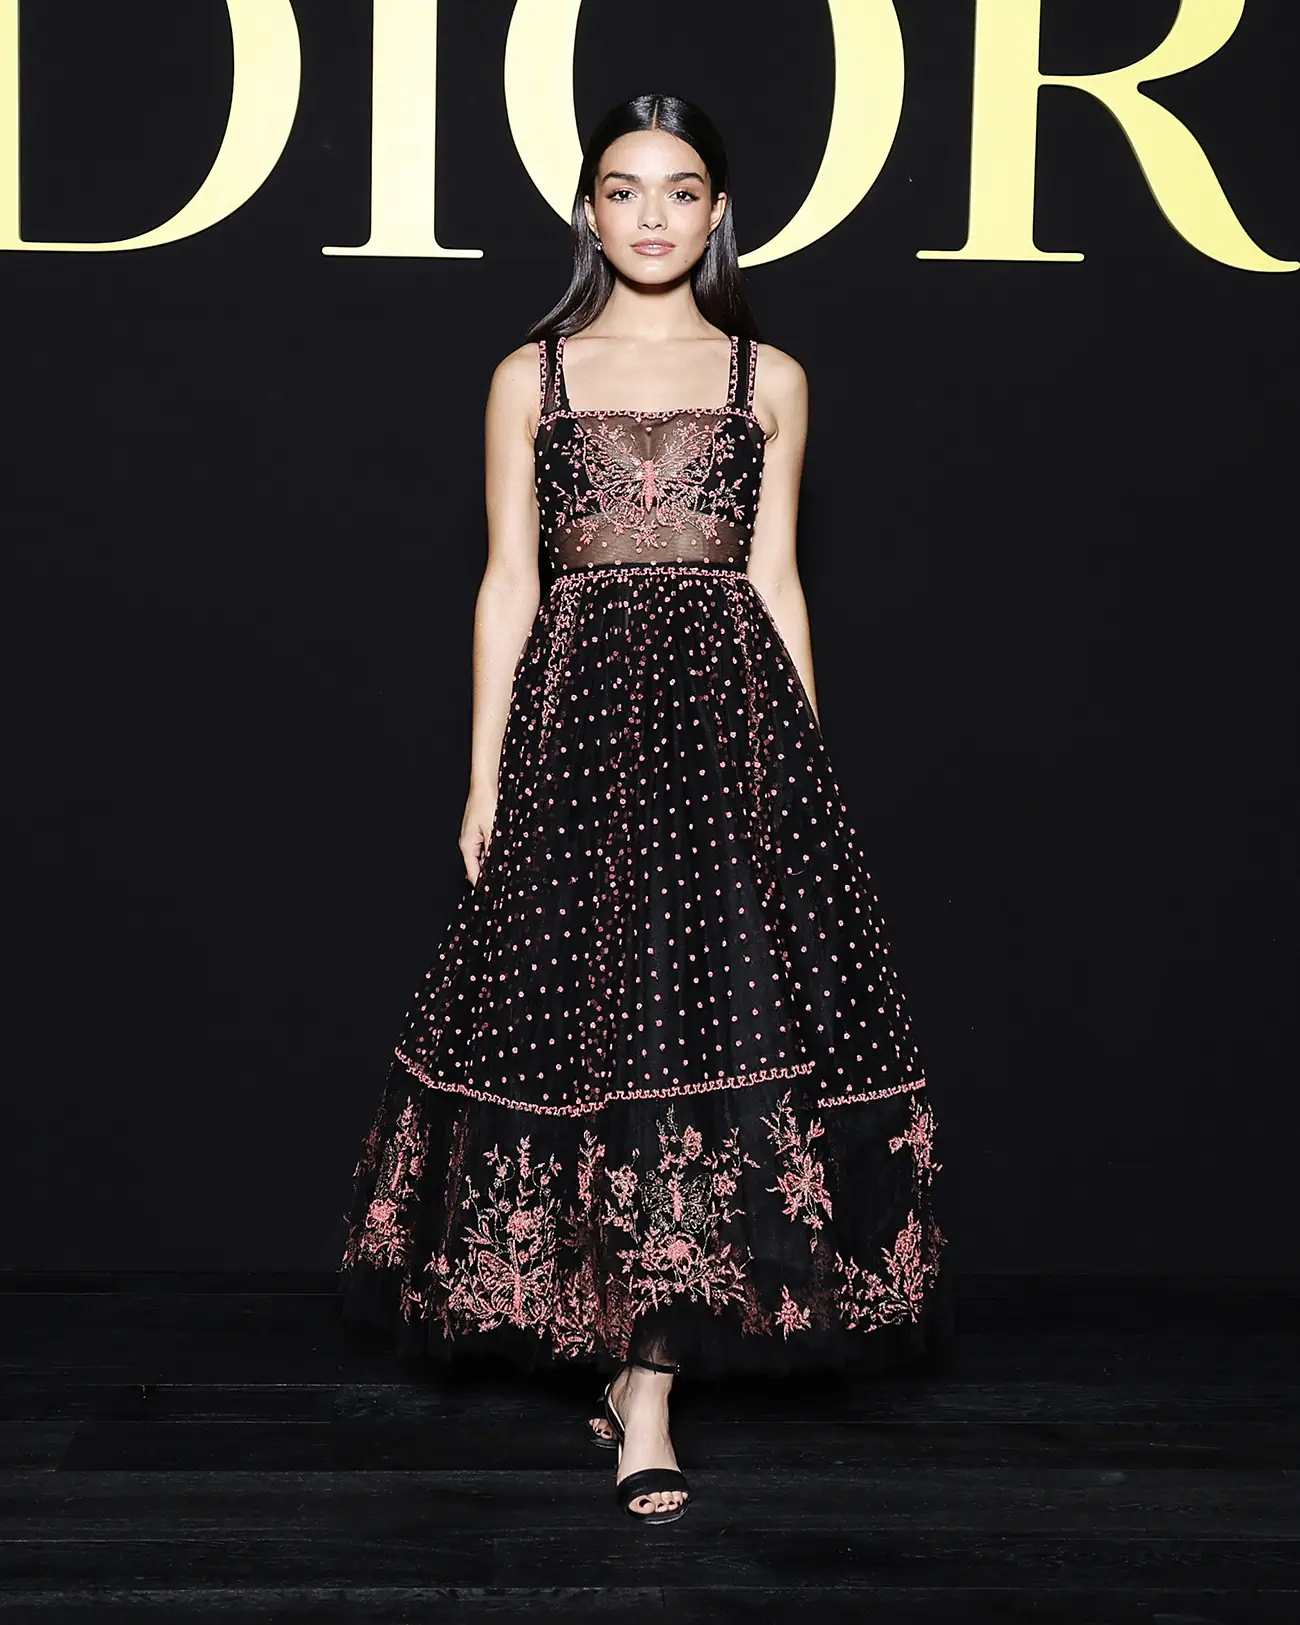 Rachel Zegler and Dilraba Dilmurat enchant as Dior's newest ambassadors